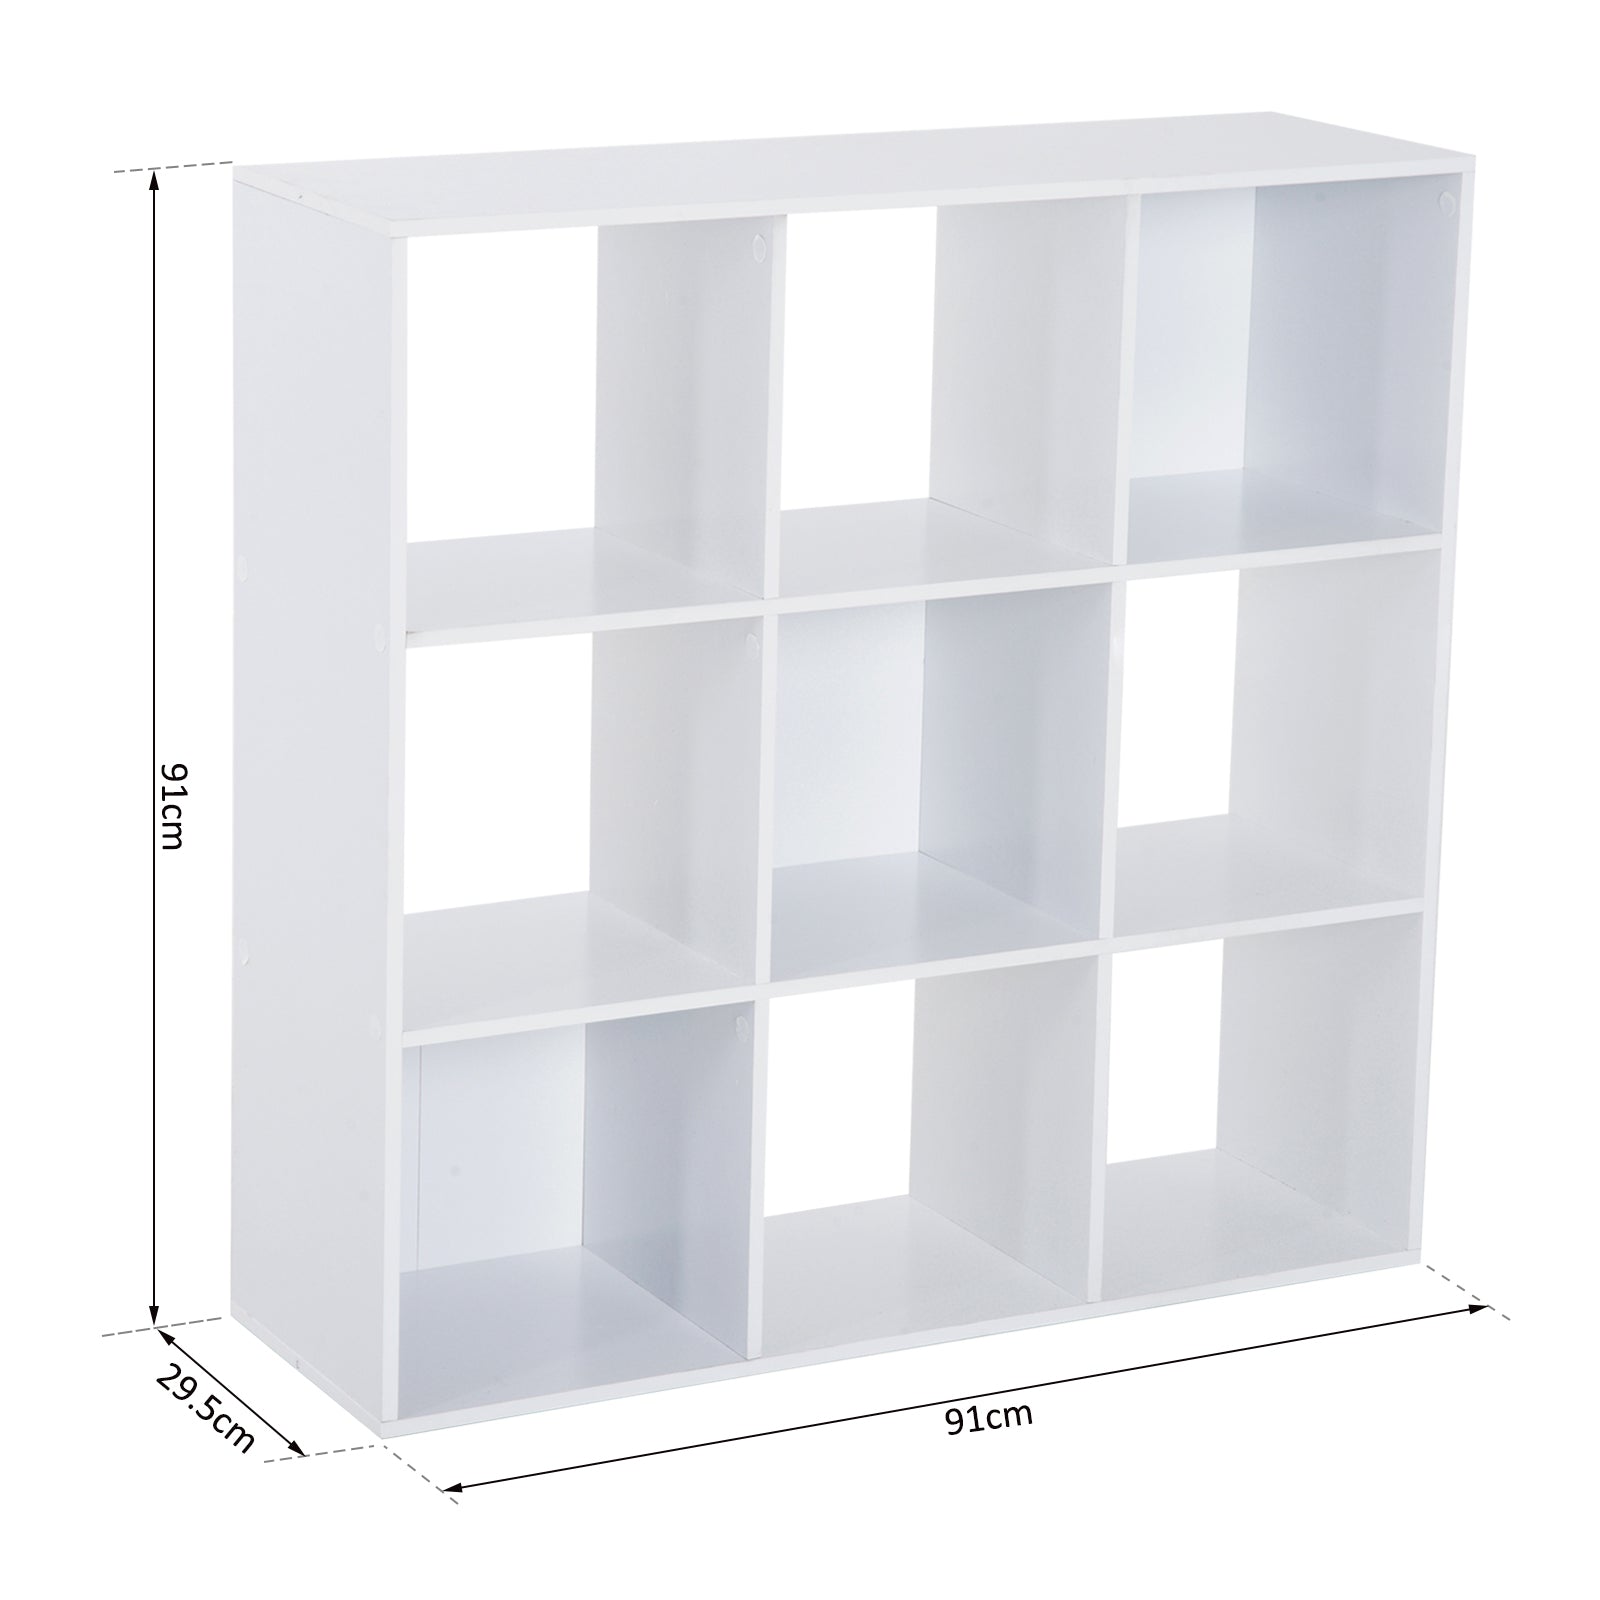 HOMCOM Wooden 9 Cube Storage Cabinet Unit 3 Tier Shelves Organiser Display Rack Living Room Bedroom Furniture - White - Inspirely